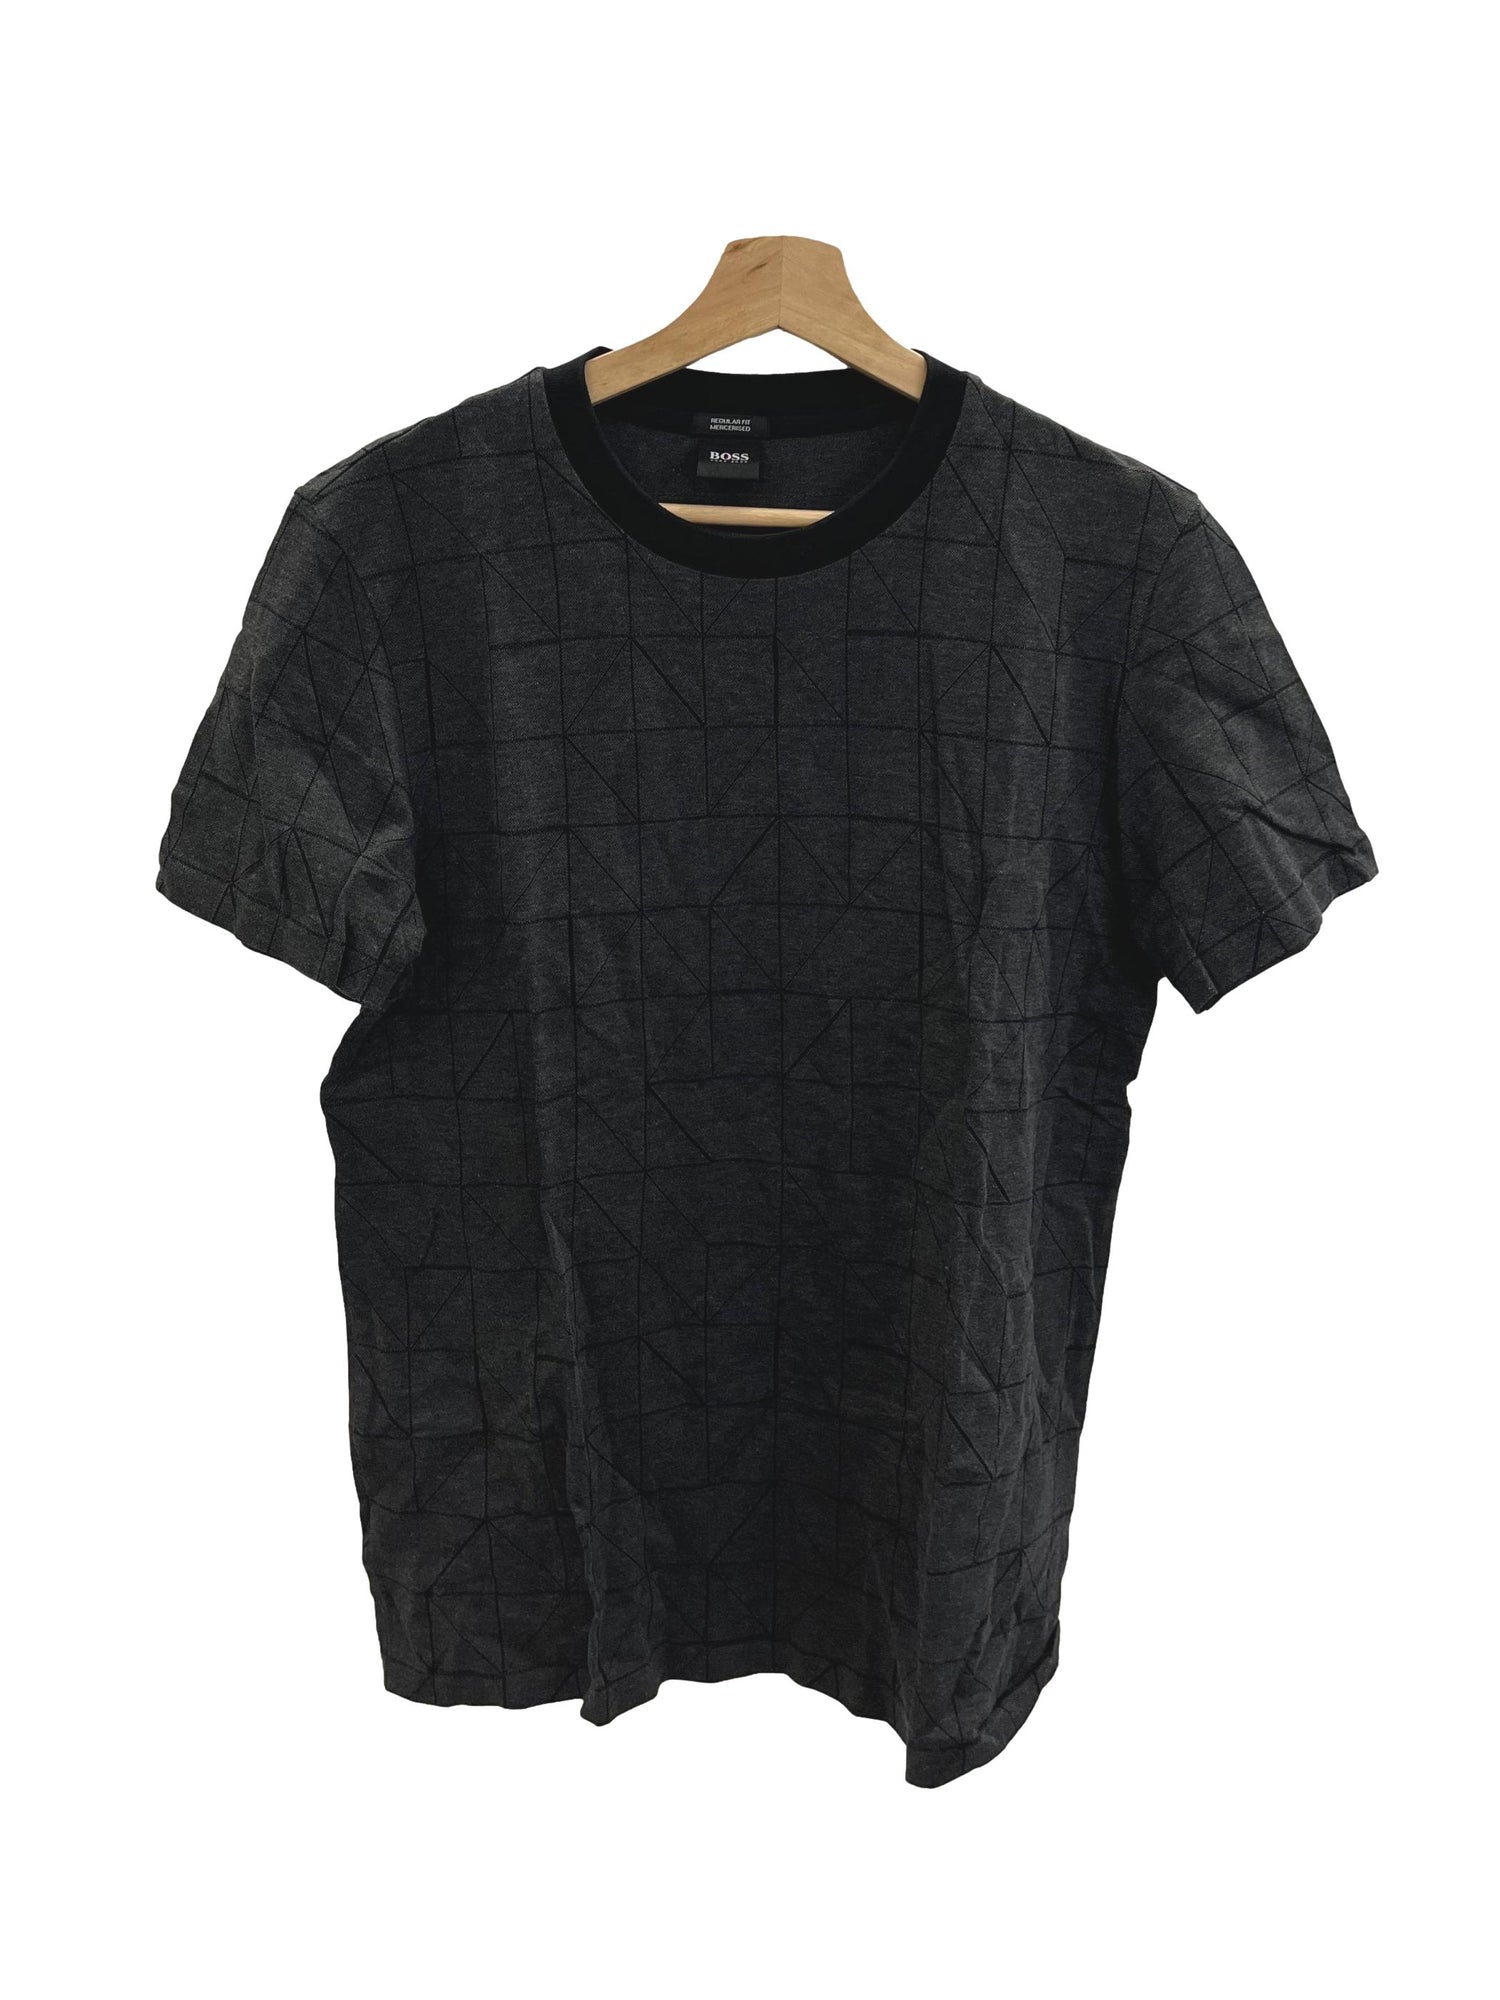 Hugo Boss Grey With Black Pattern T-Shirt, Men's Fashion, Tops & Sets ...